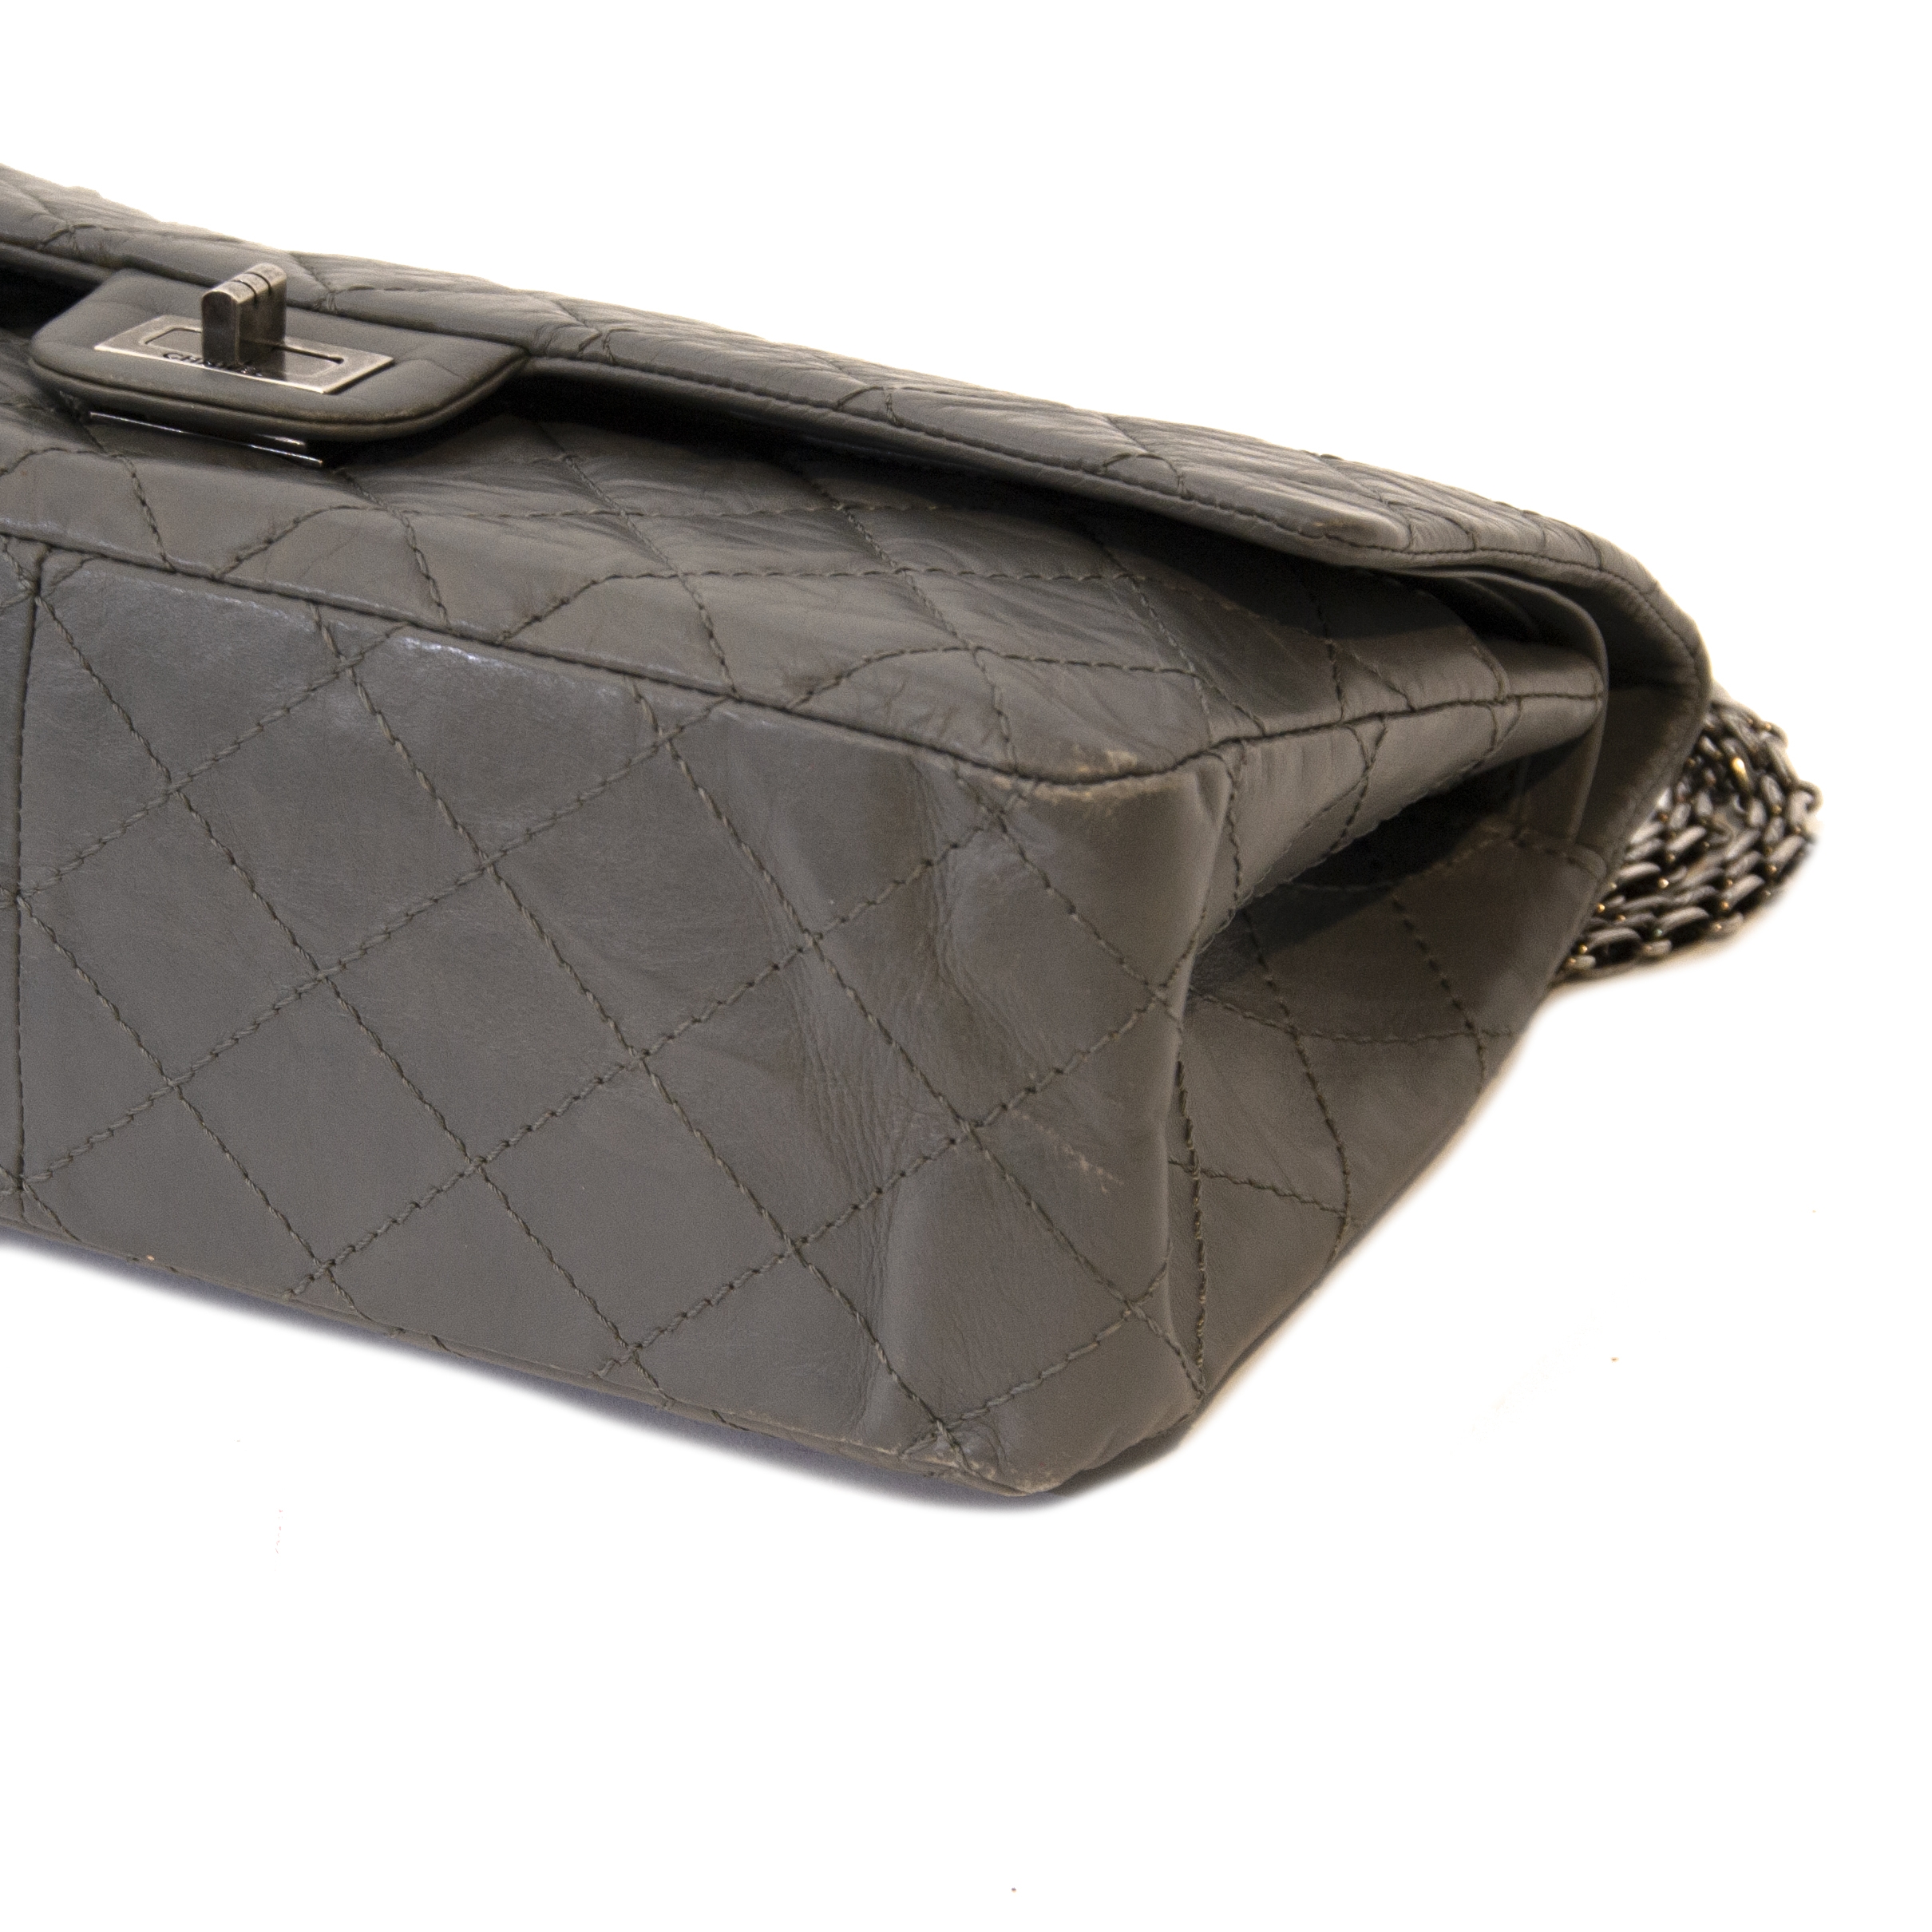 Chanel 22 leather handbag Chanel Grey in Leather - 33742826